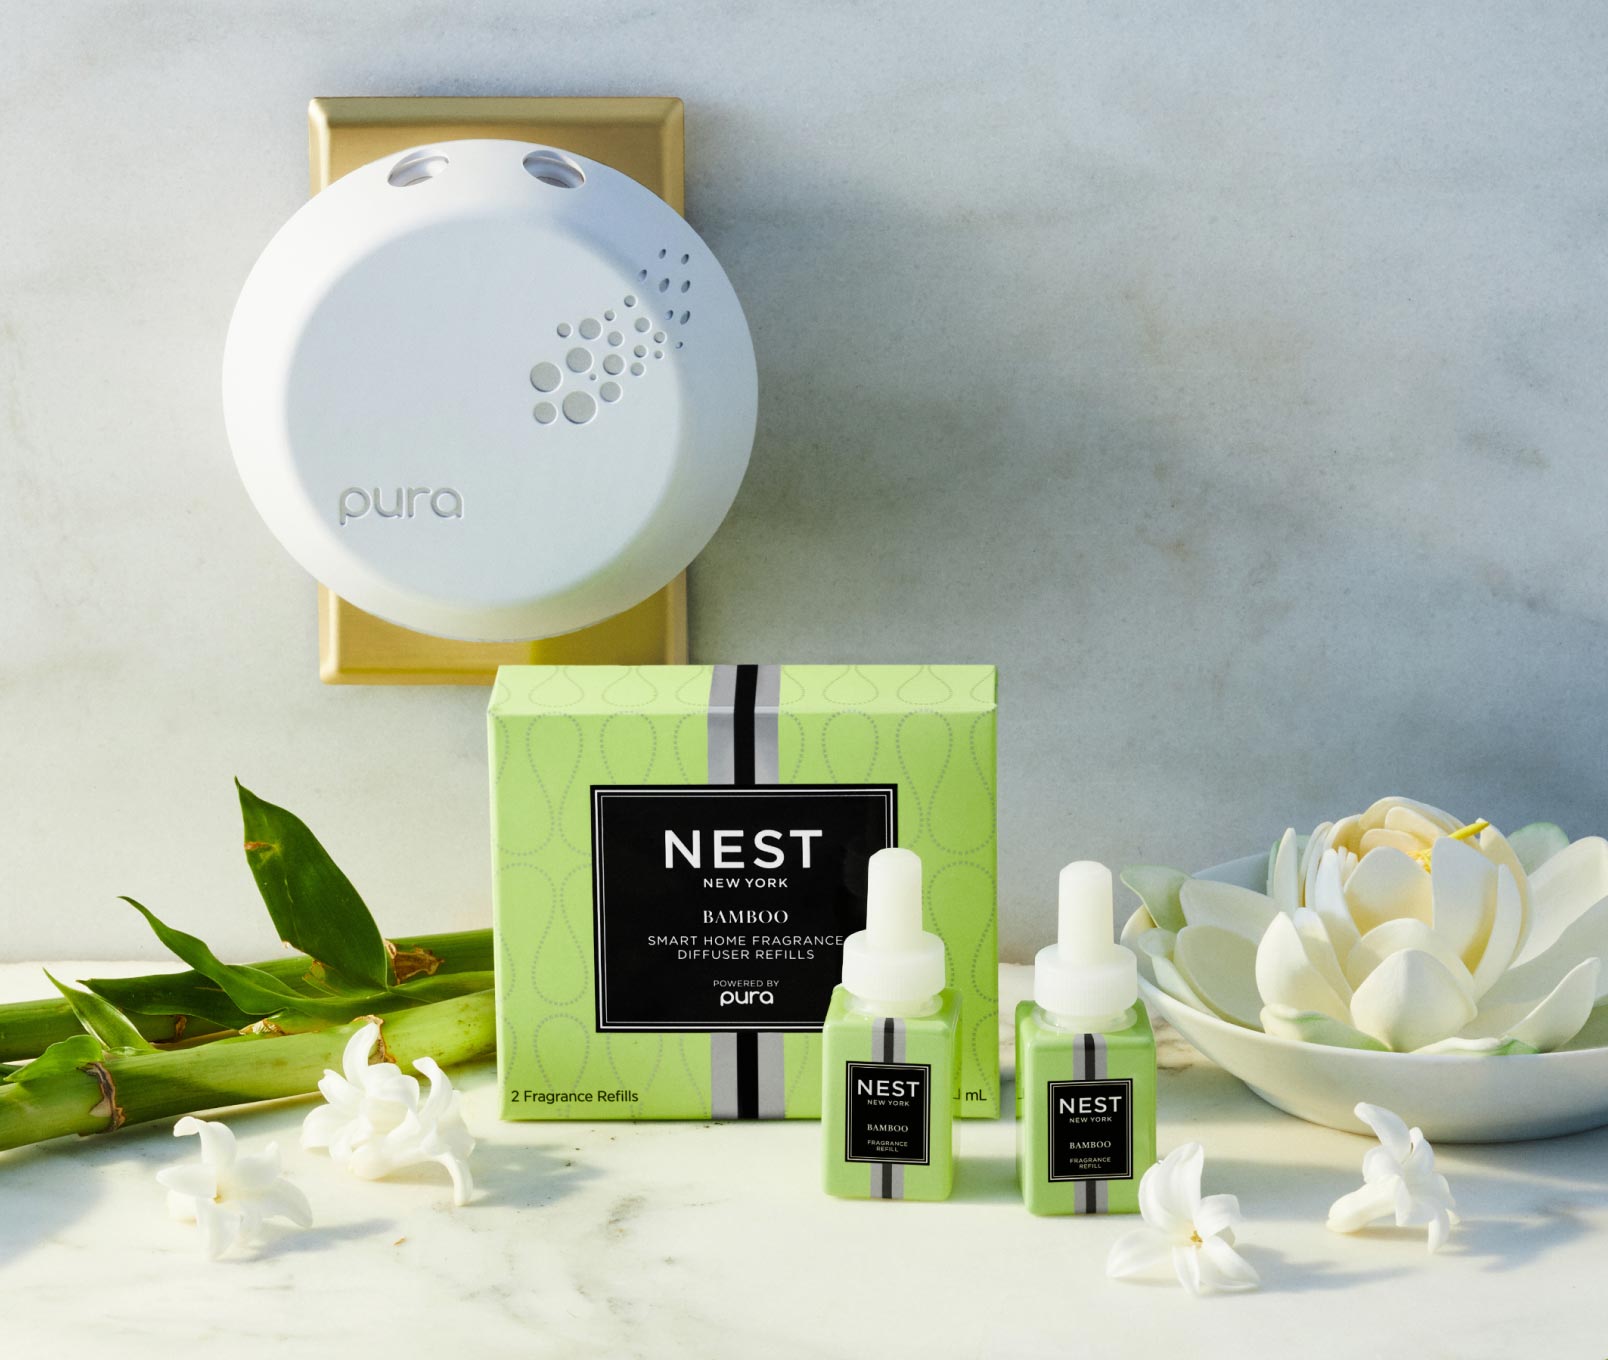 Nest New York Ocean Mist and Sea Salt Pura Smart Home Fragrance Diffuser Refill, Set of 2